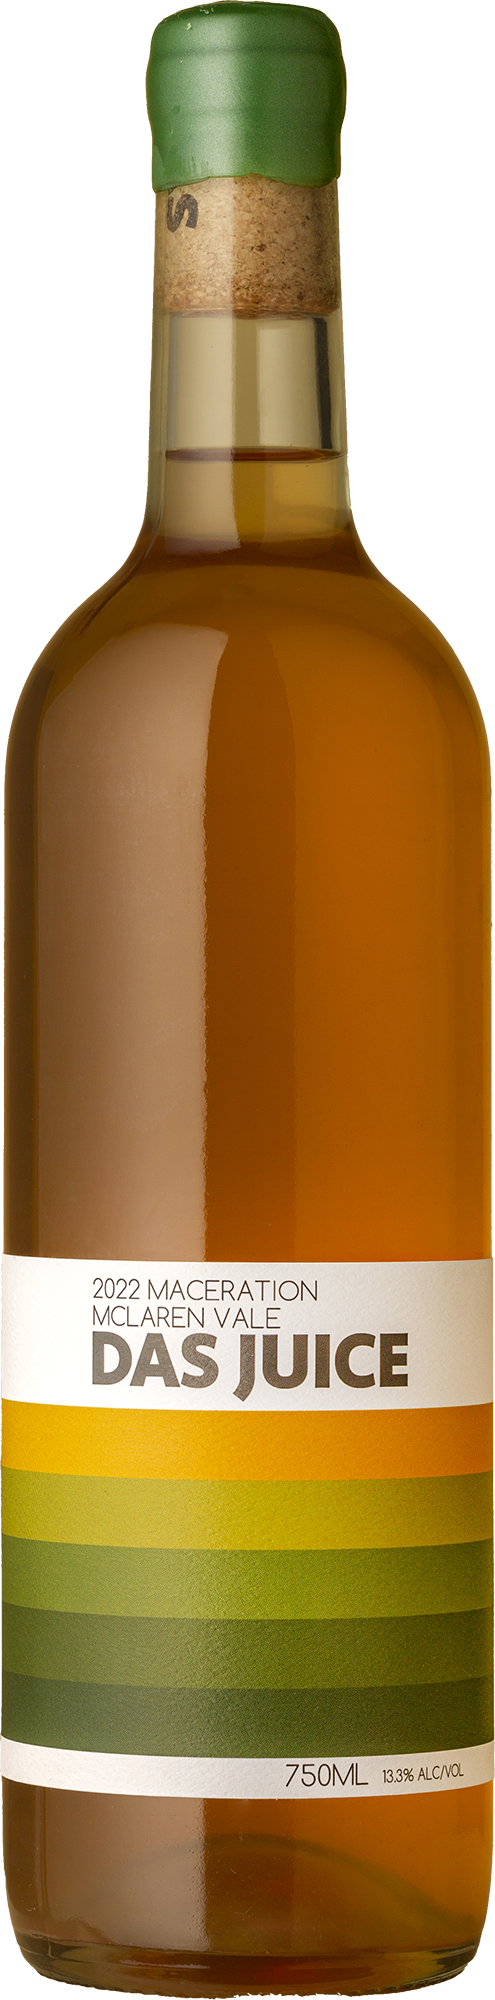 Das Juice - Maceration 2022 Orange Wine